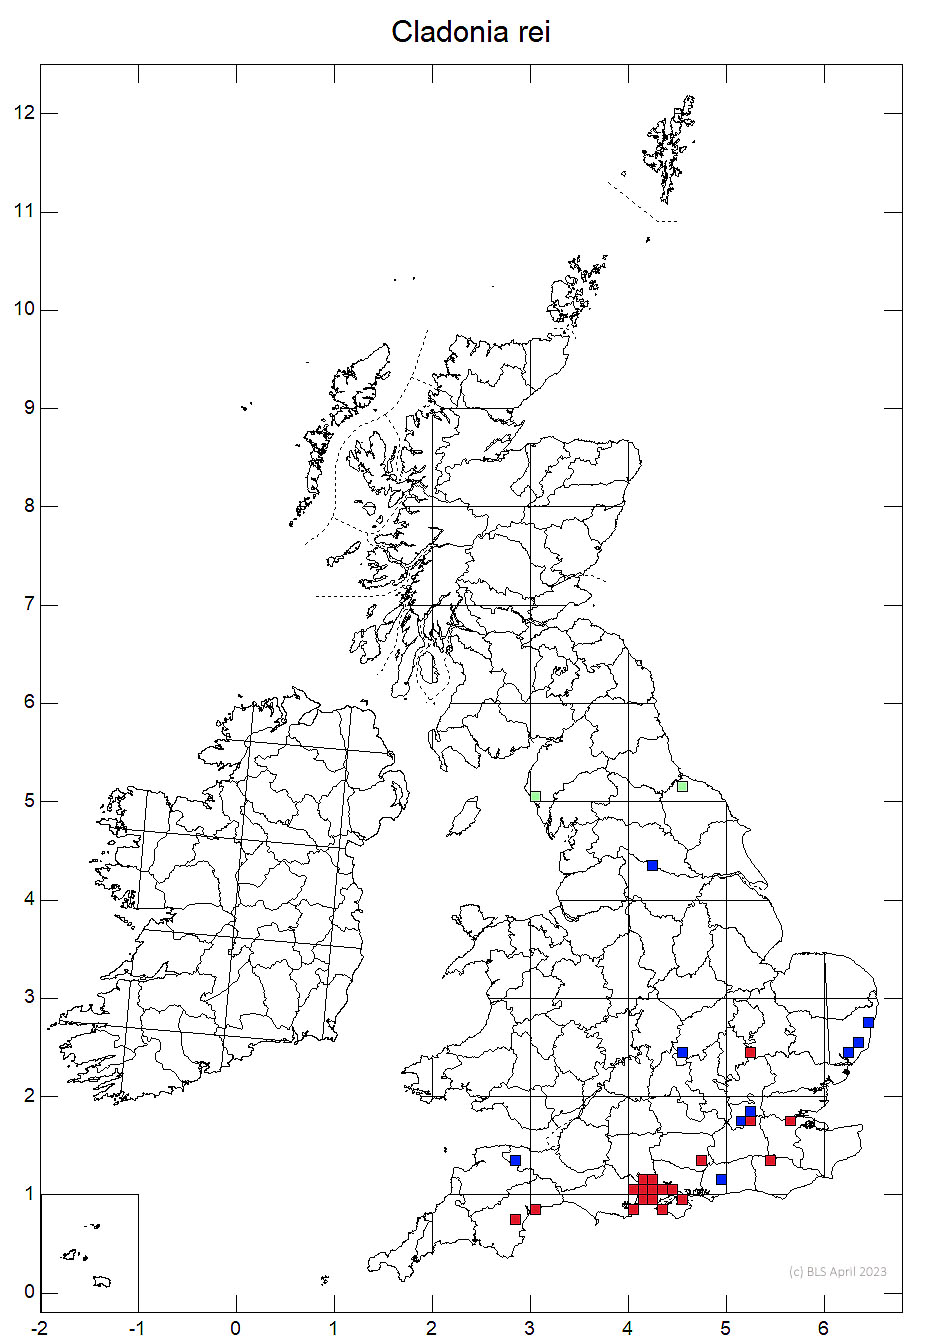 Cladonia rei 10km sq distribution map